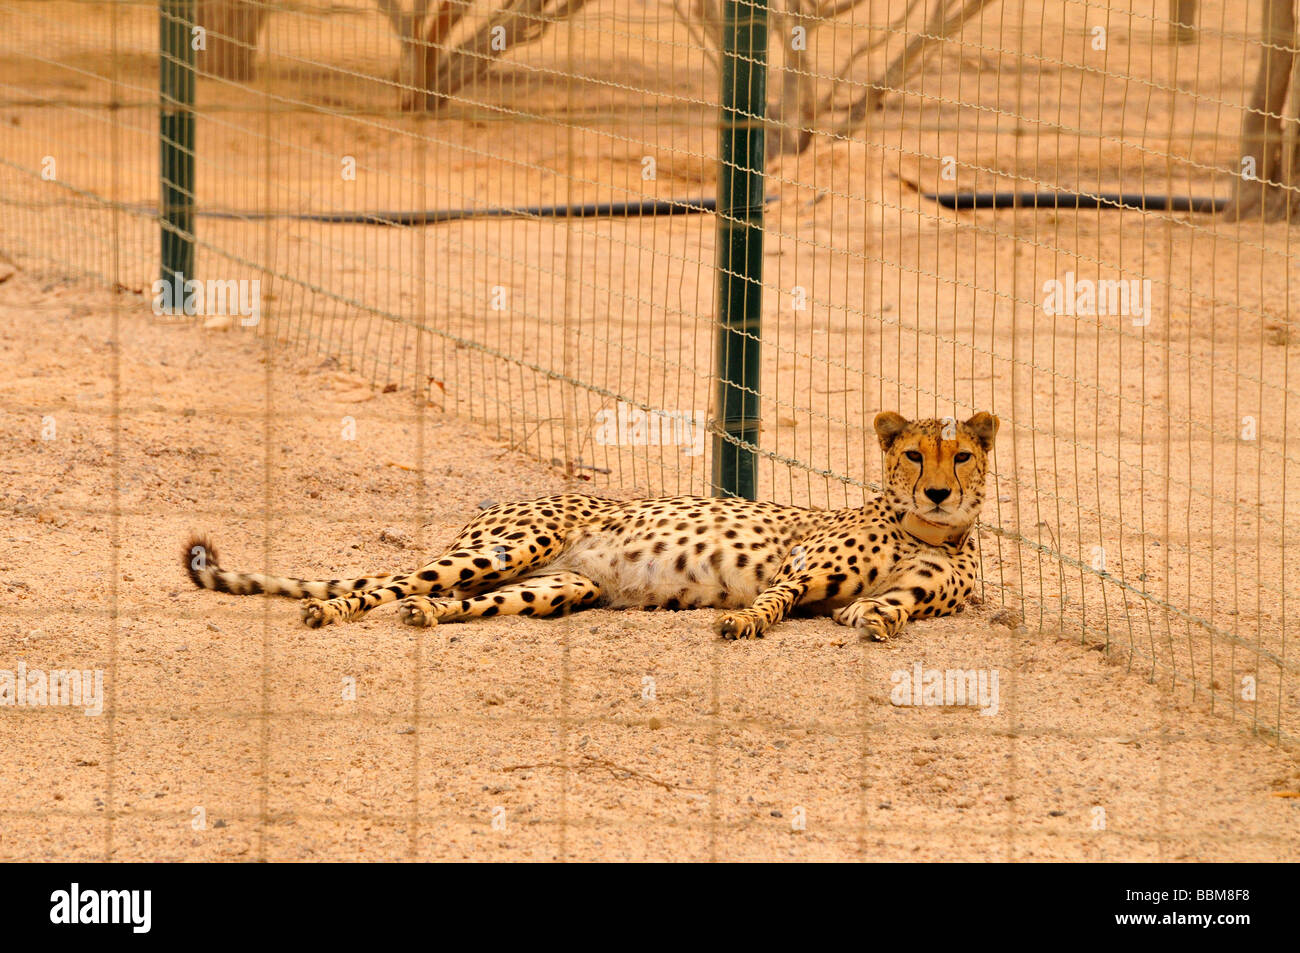 Cheetah (Acinonyx jubatus soemmerringii), in a vivarium, Sir Bani Yas Island, Abu Dhabi, United Arab Emirates, Arabia, Near Eas Stock Photo